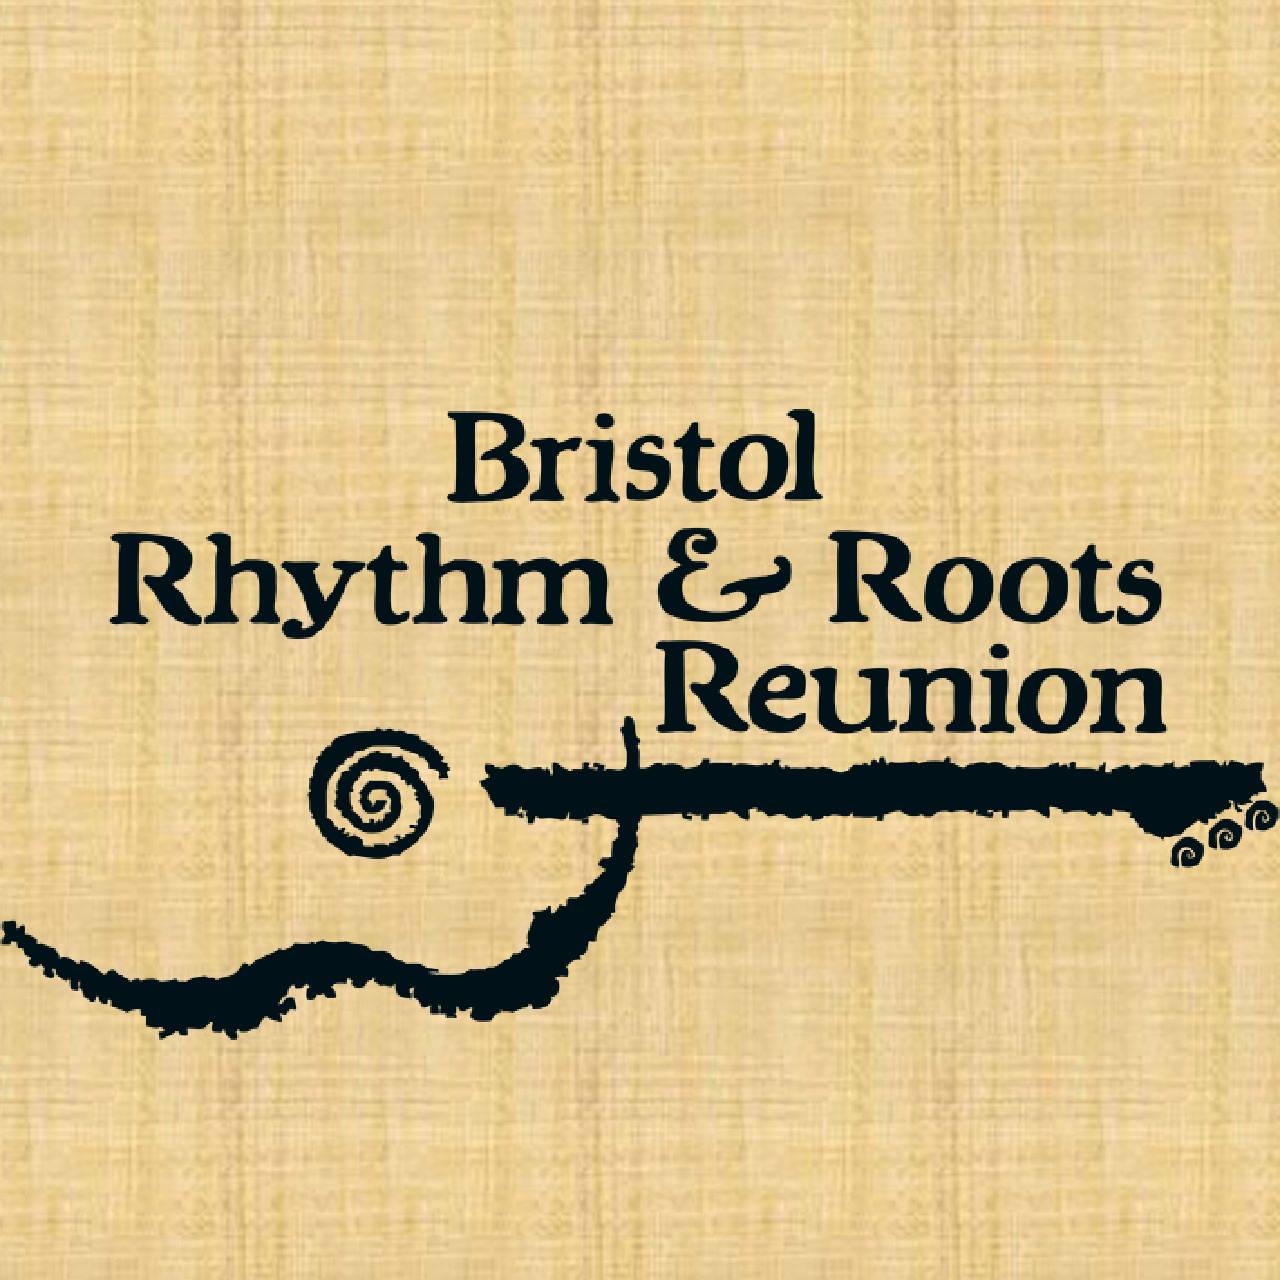 Bristol Roots & Rhythm Reunion